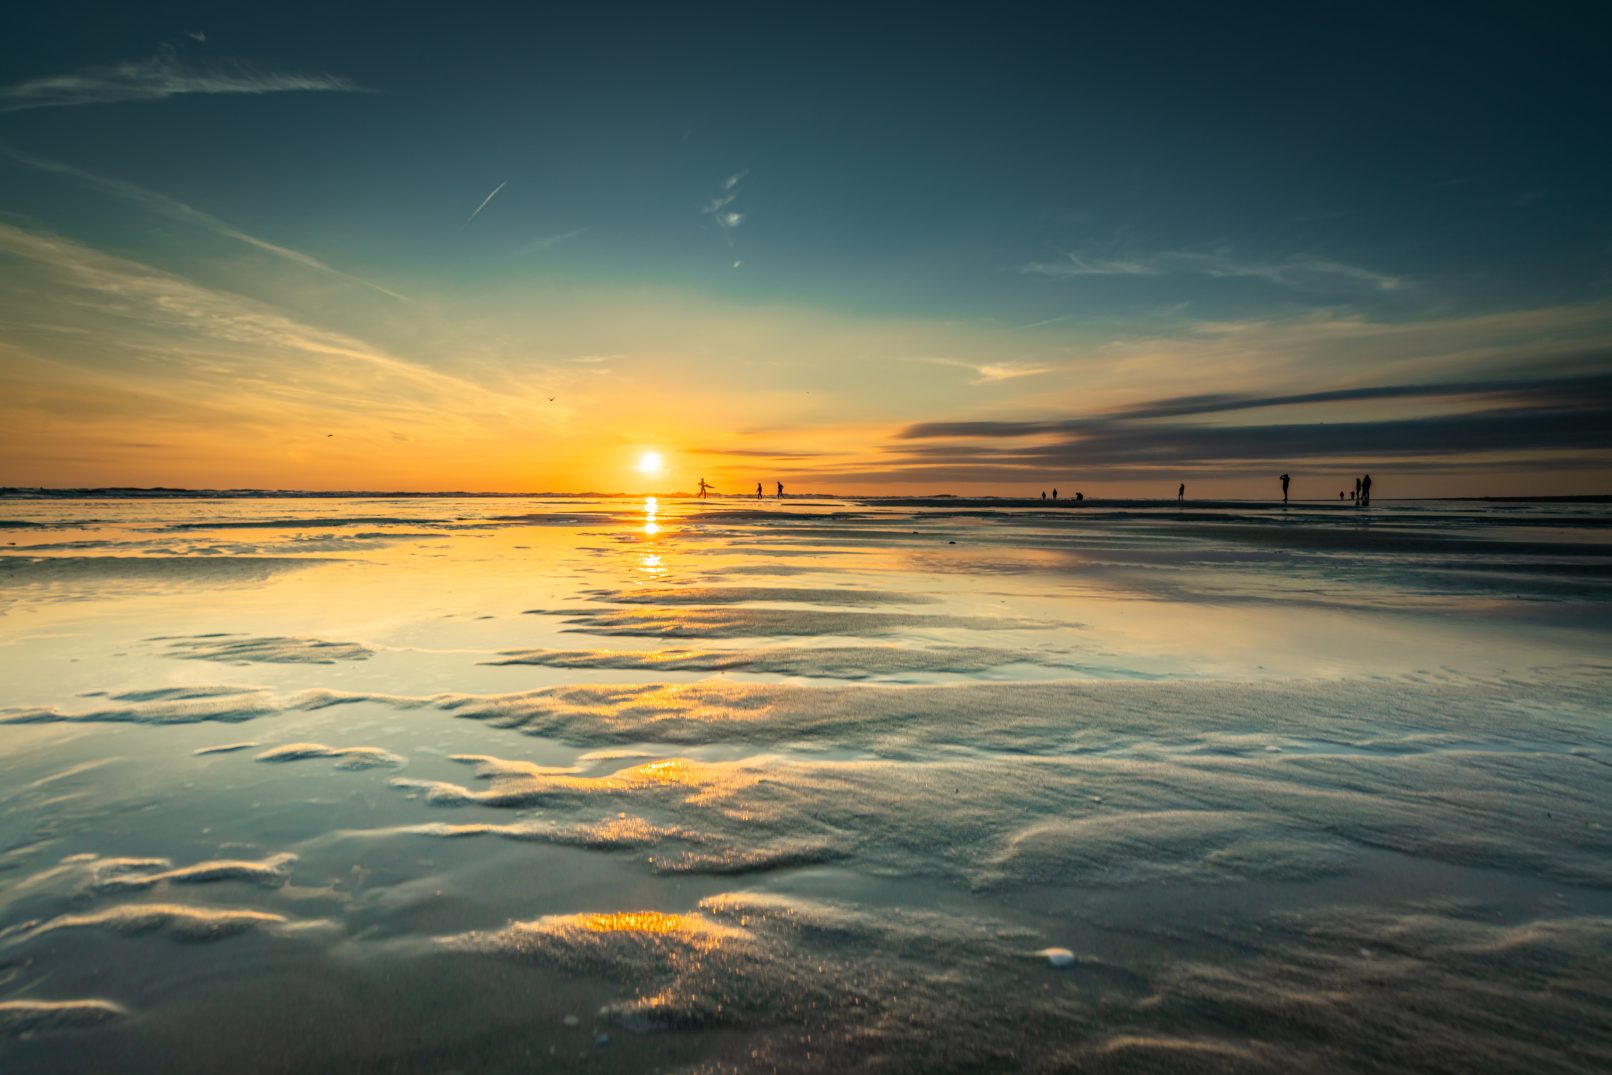 Texel The Netherlands Sunset at sea photograph © 2020 Iris Borst